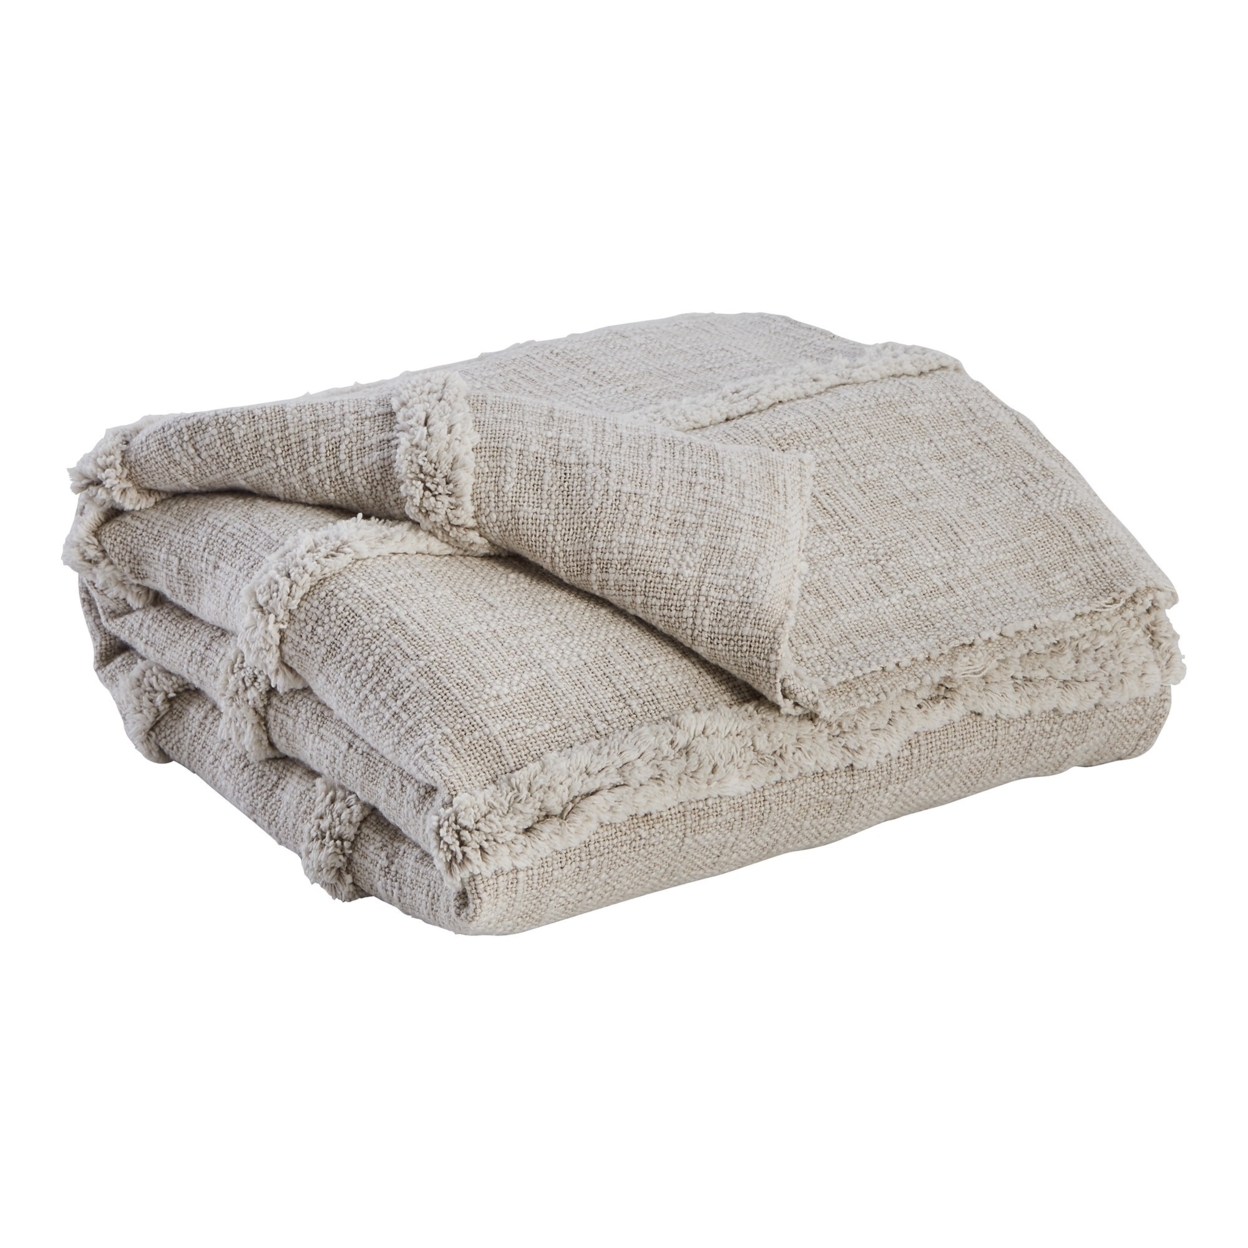 60 Inch Modern Soft Cotton Throw Blanket, Stonewashed Stripe Design, Gray- Saltoro Sherpi